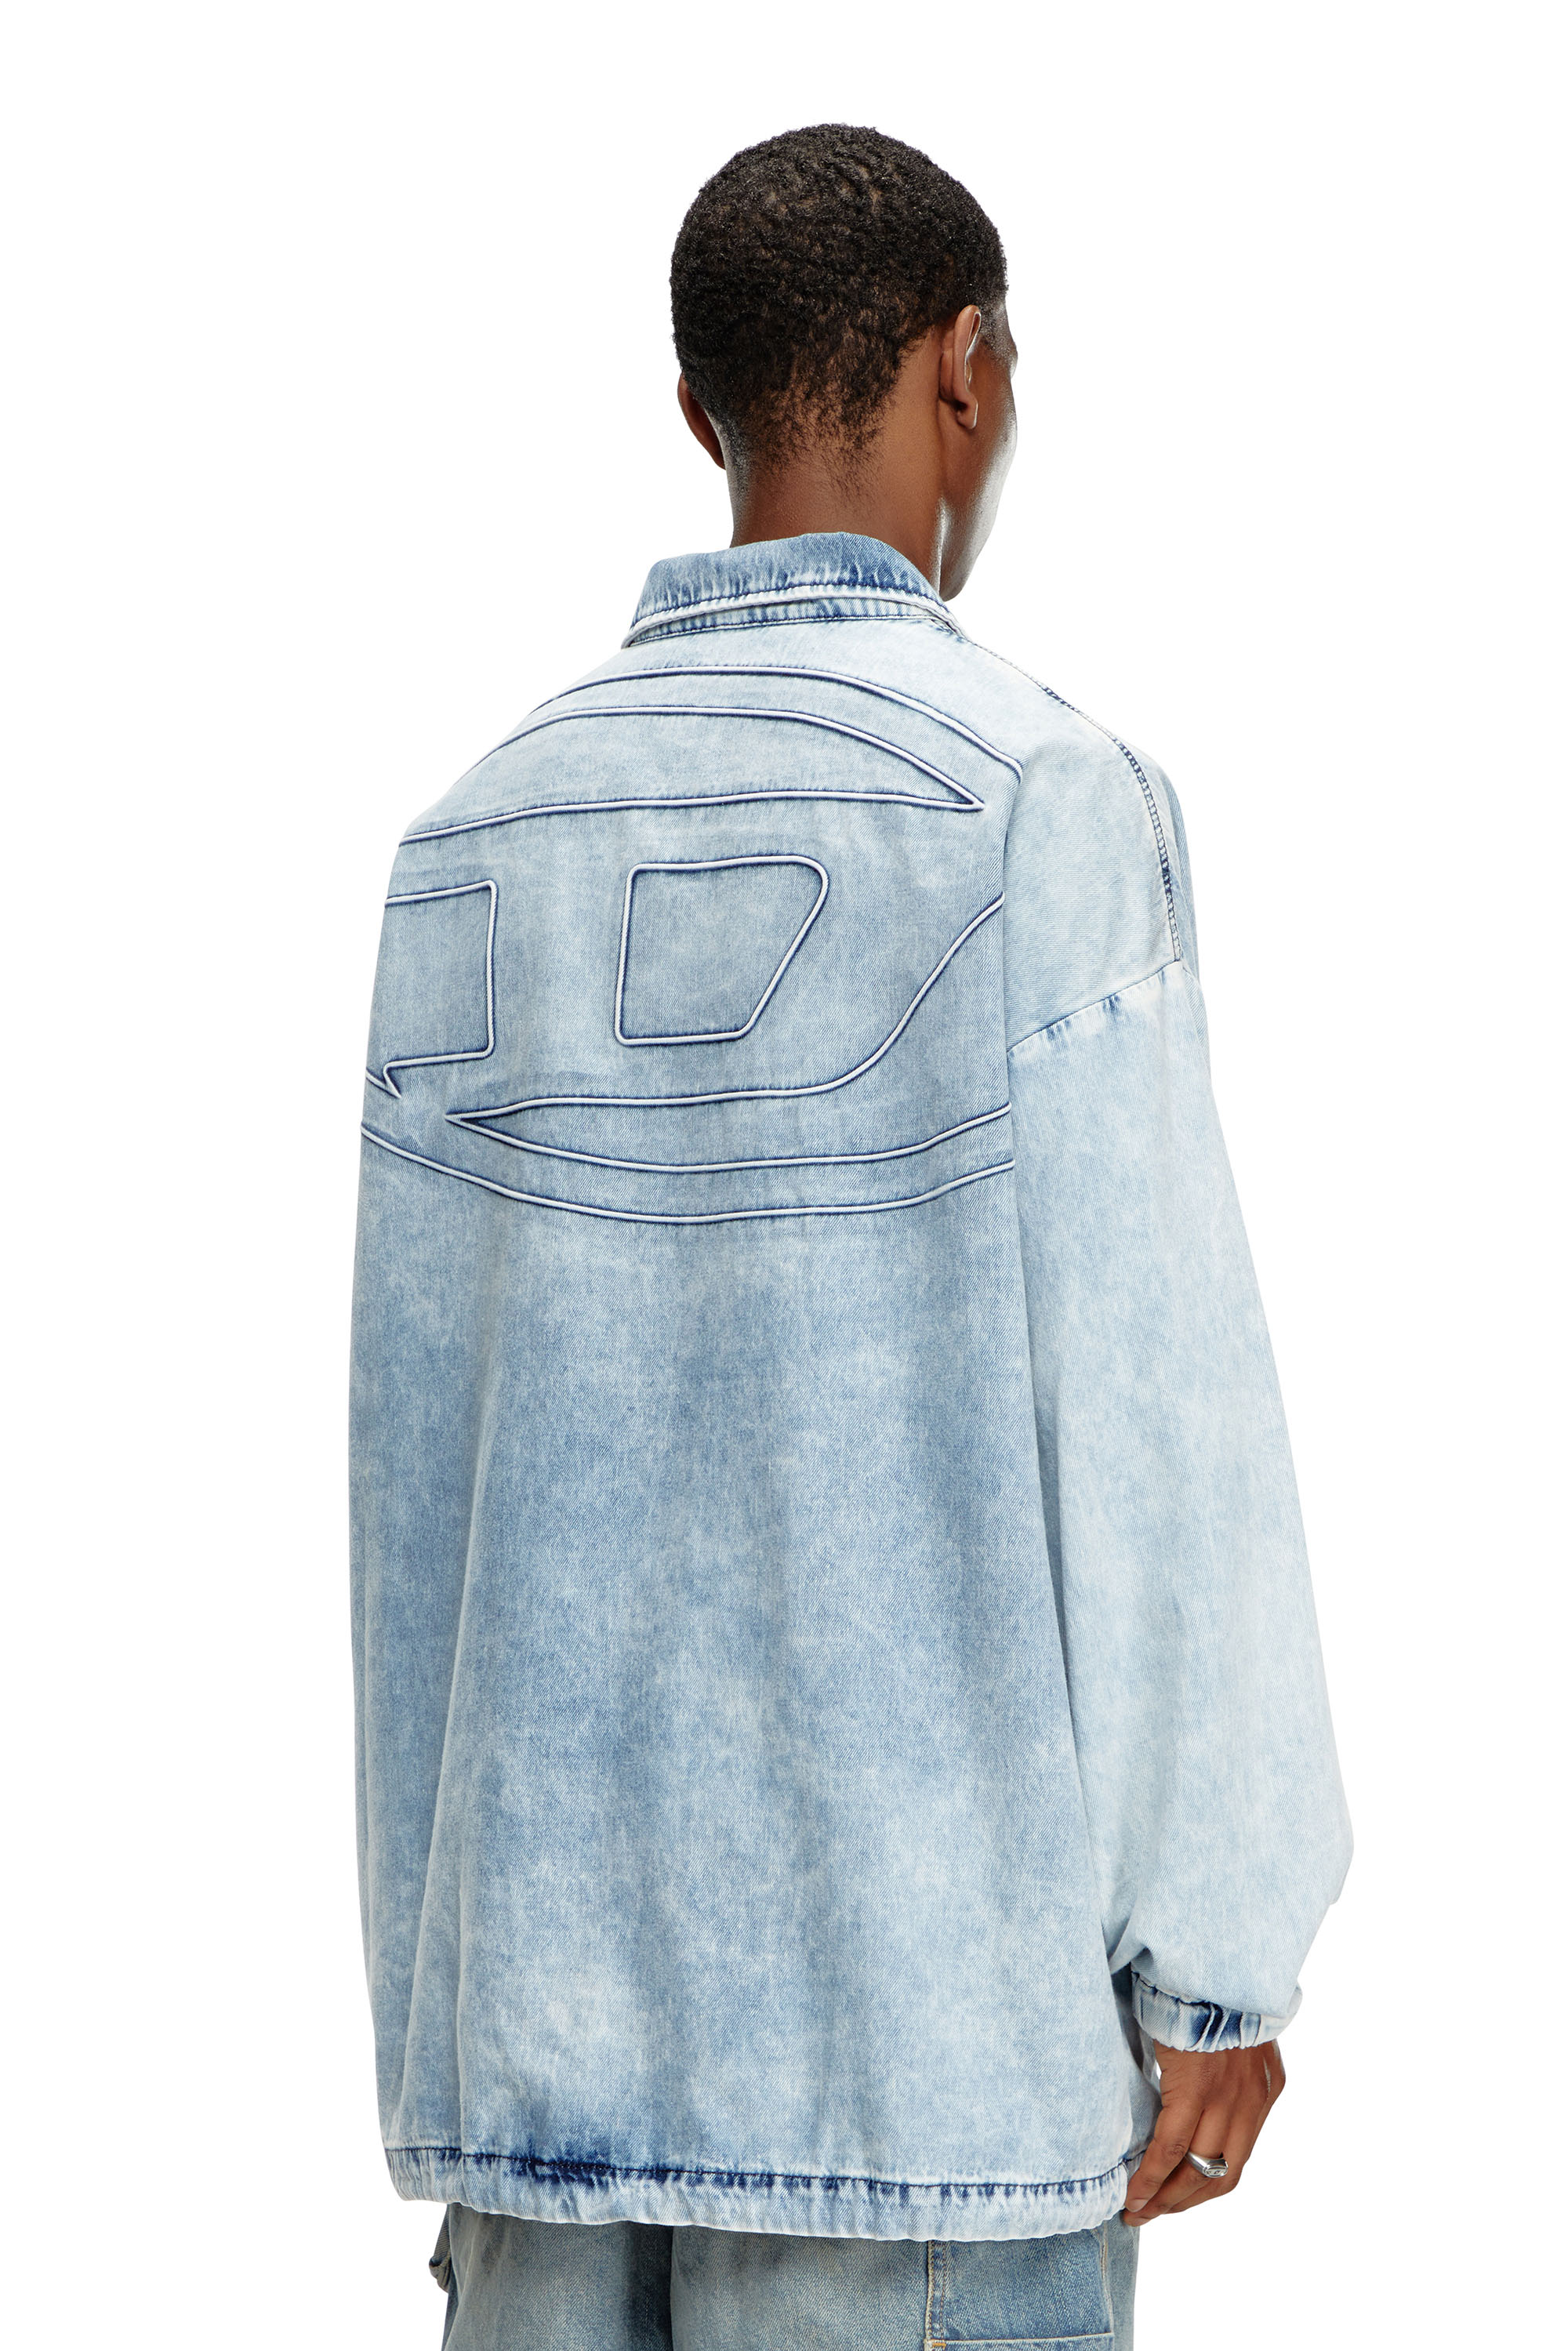 Diesel - D-KRAP-S1, Male Denim jacket with Oval D in ブルー - Image 1